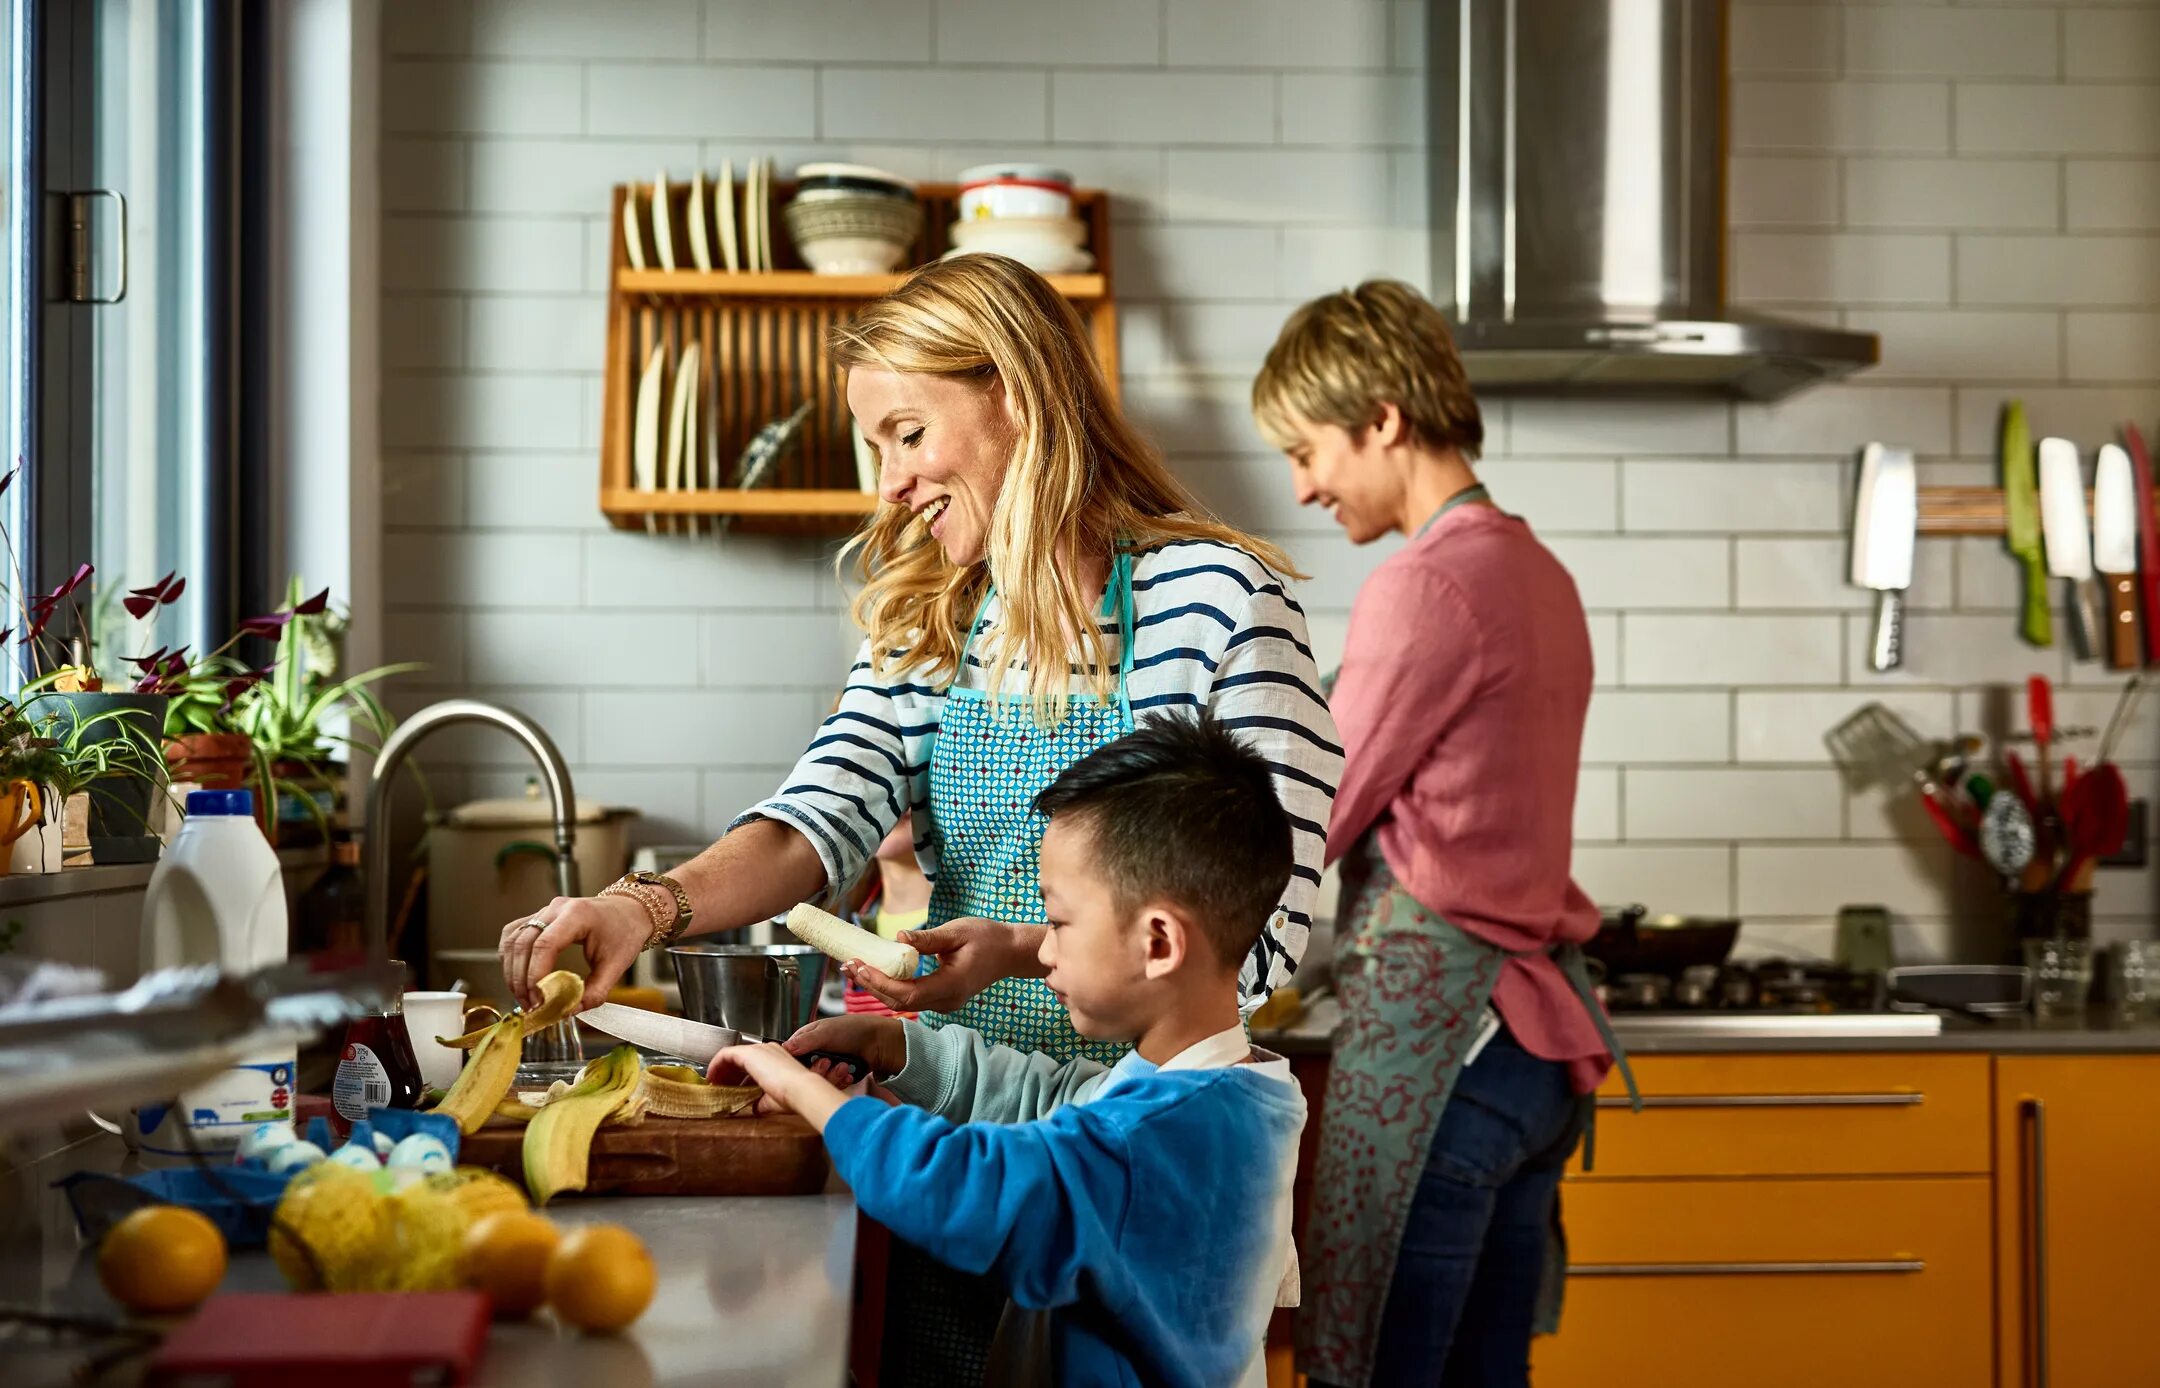 Has mum cook. Семья на кухне. Семейная кухня. Счастливая семья на кухне. Идеальная семья на кухне.